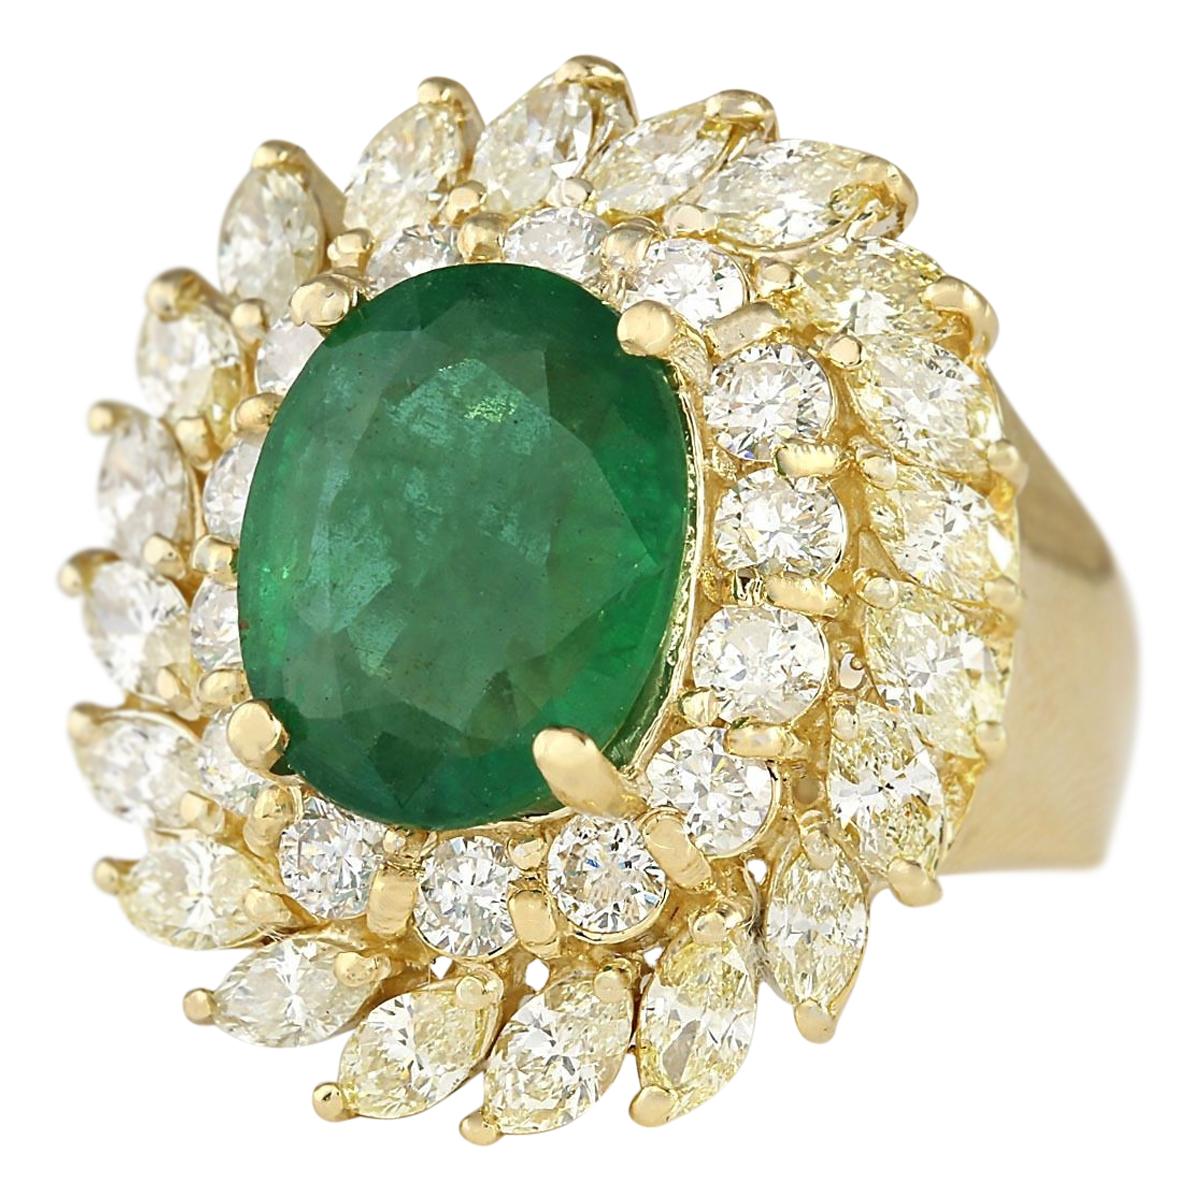 8.57 Carat Natural Emerald 14 Karat Yellow Gold Diamond Ring
Stamped: 14K Yellow Gold
Total Ring Weight: 15.0 Grams
Total Natural Emerald Weight is 4.82 Carat (Measures: 12.00x10.00 mm)
Color: Green
Total Natural Diamond Weight is 3.75 Carat
Color: